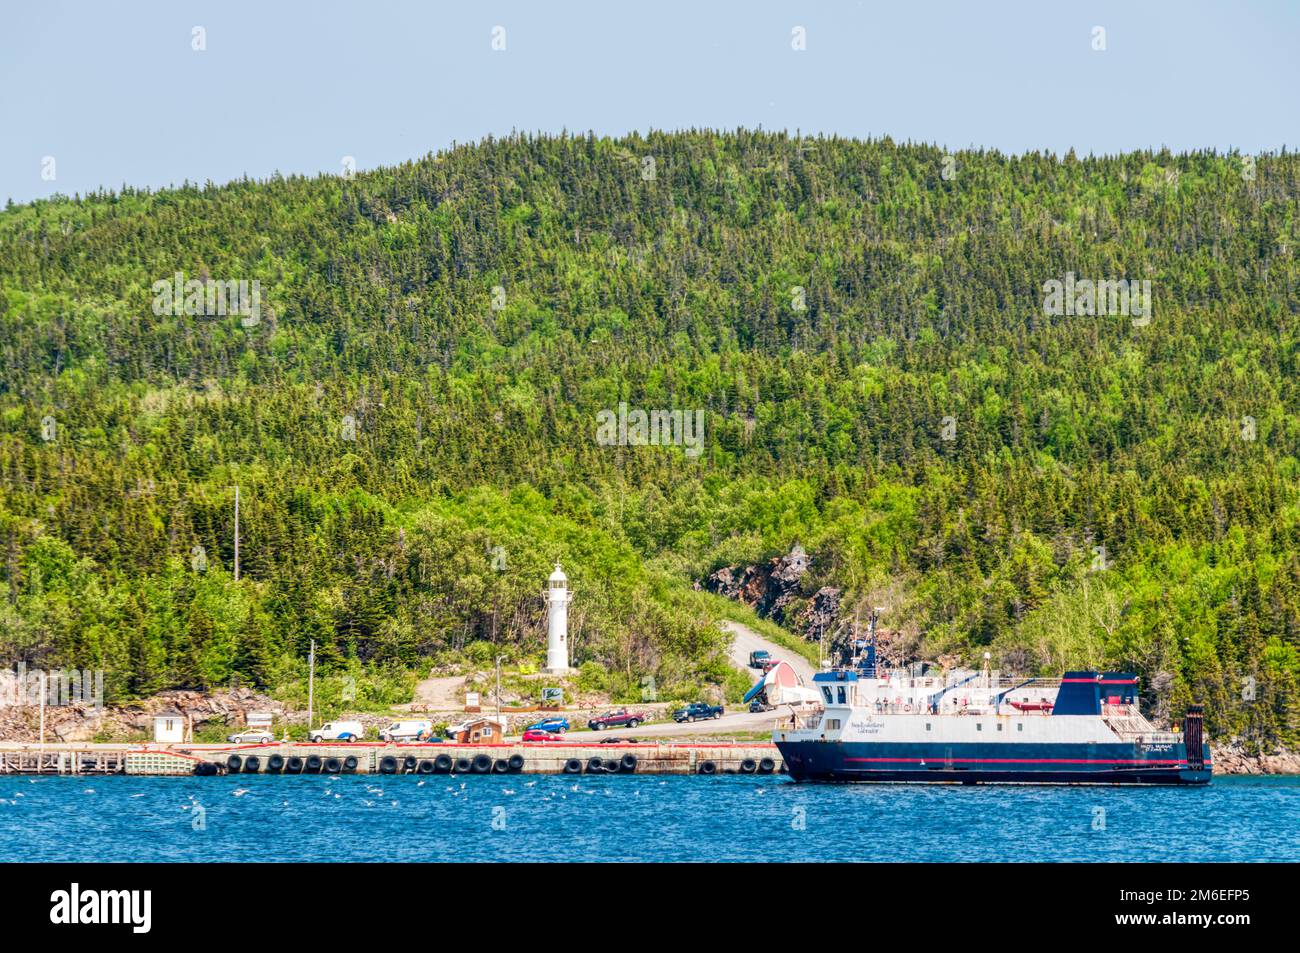 The MV Hazel McIsaac car ferry docked at Long Island in Newfoundland's Green Bay, Canada. Stock Photo